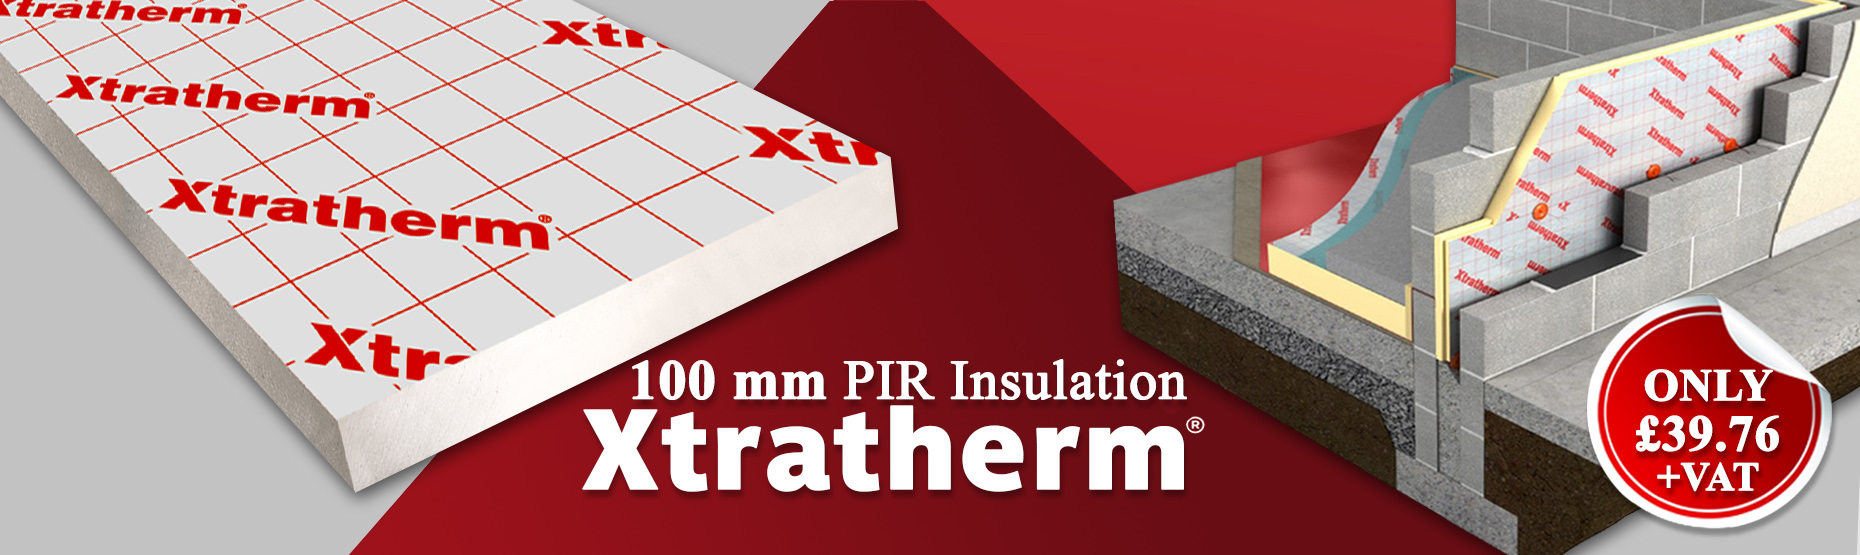 100mm PIR Insulation